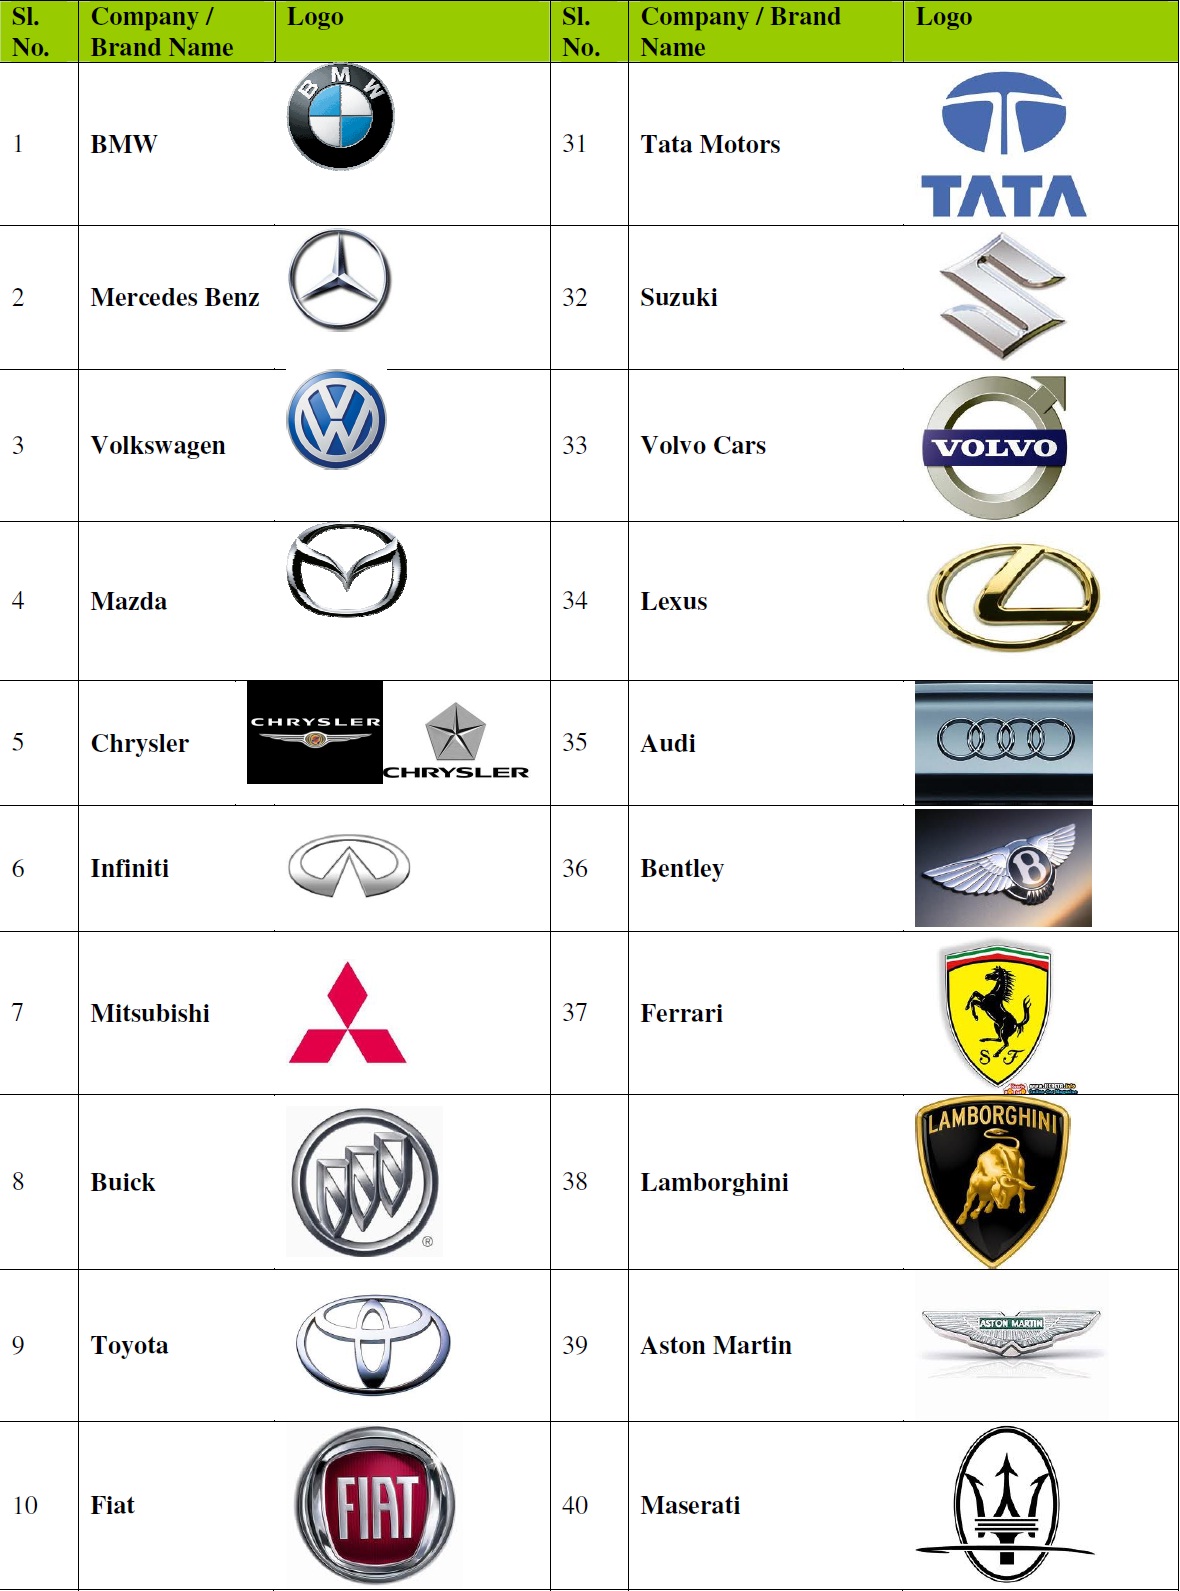 British Car Company Logos